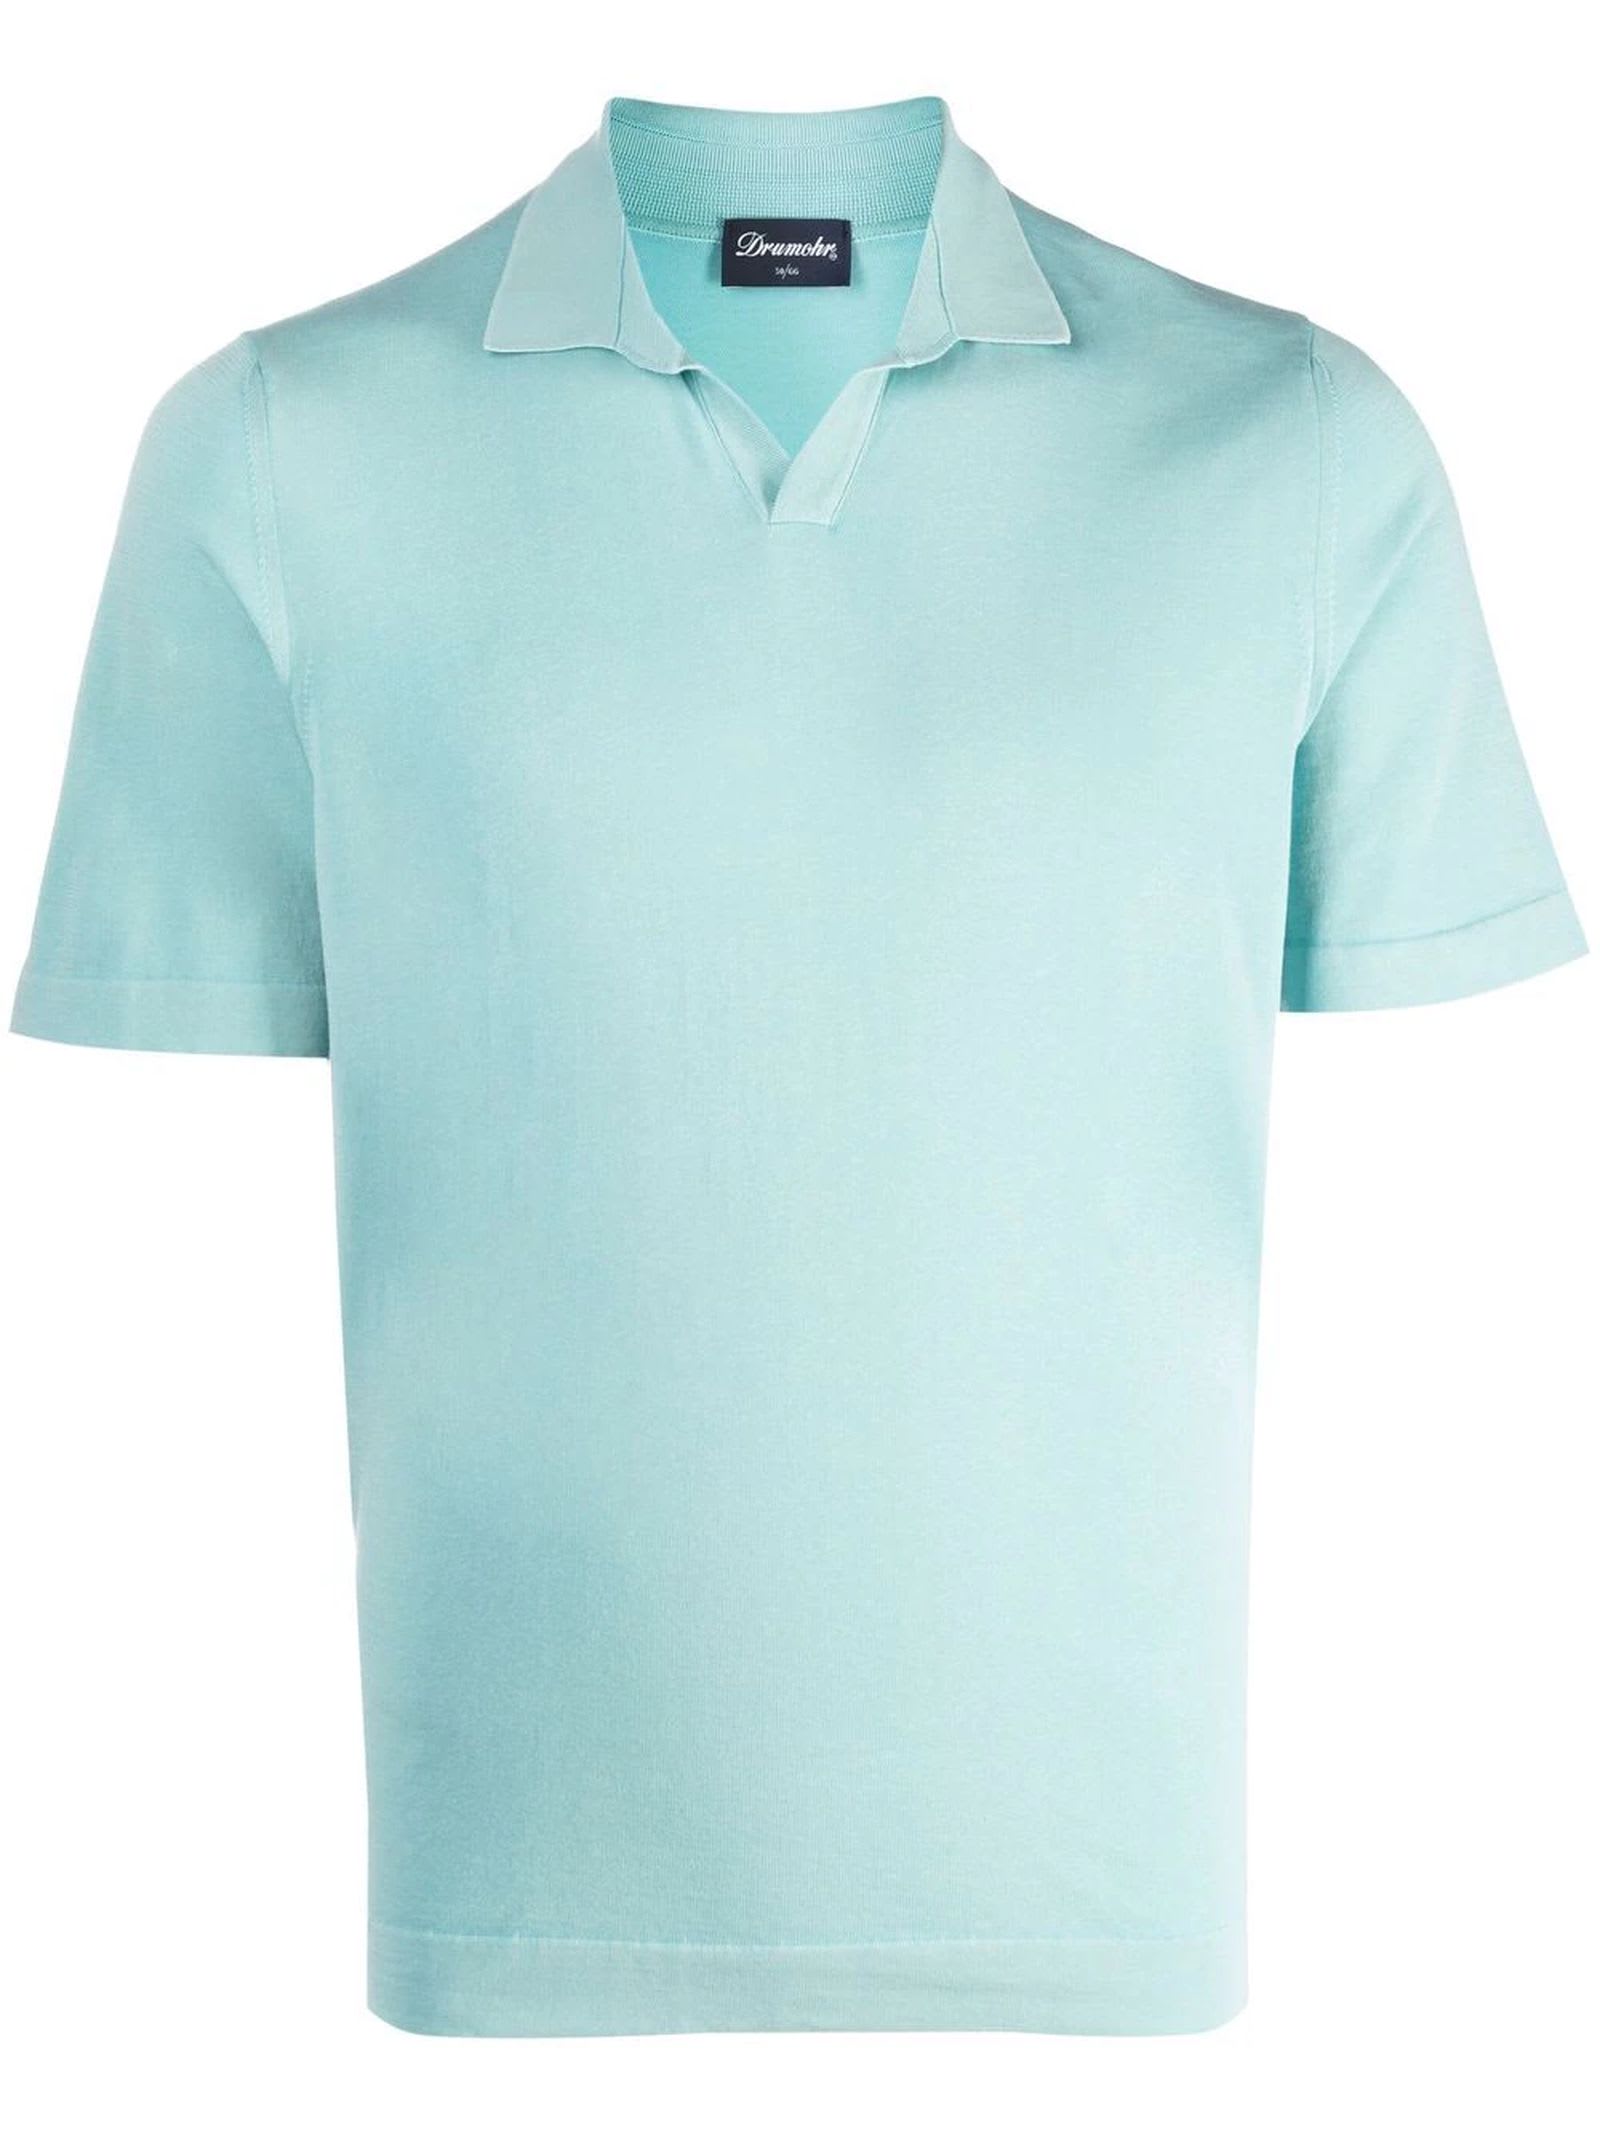 Drumohr Tiffany Blue Cotton Polo Shirt